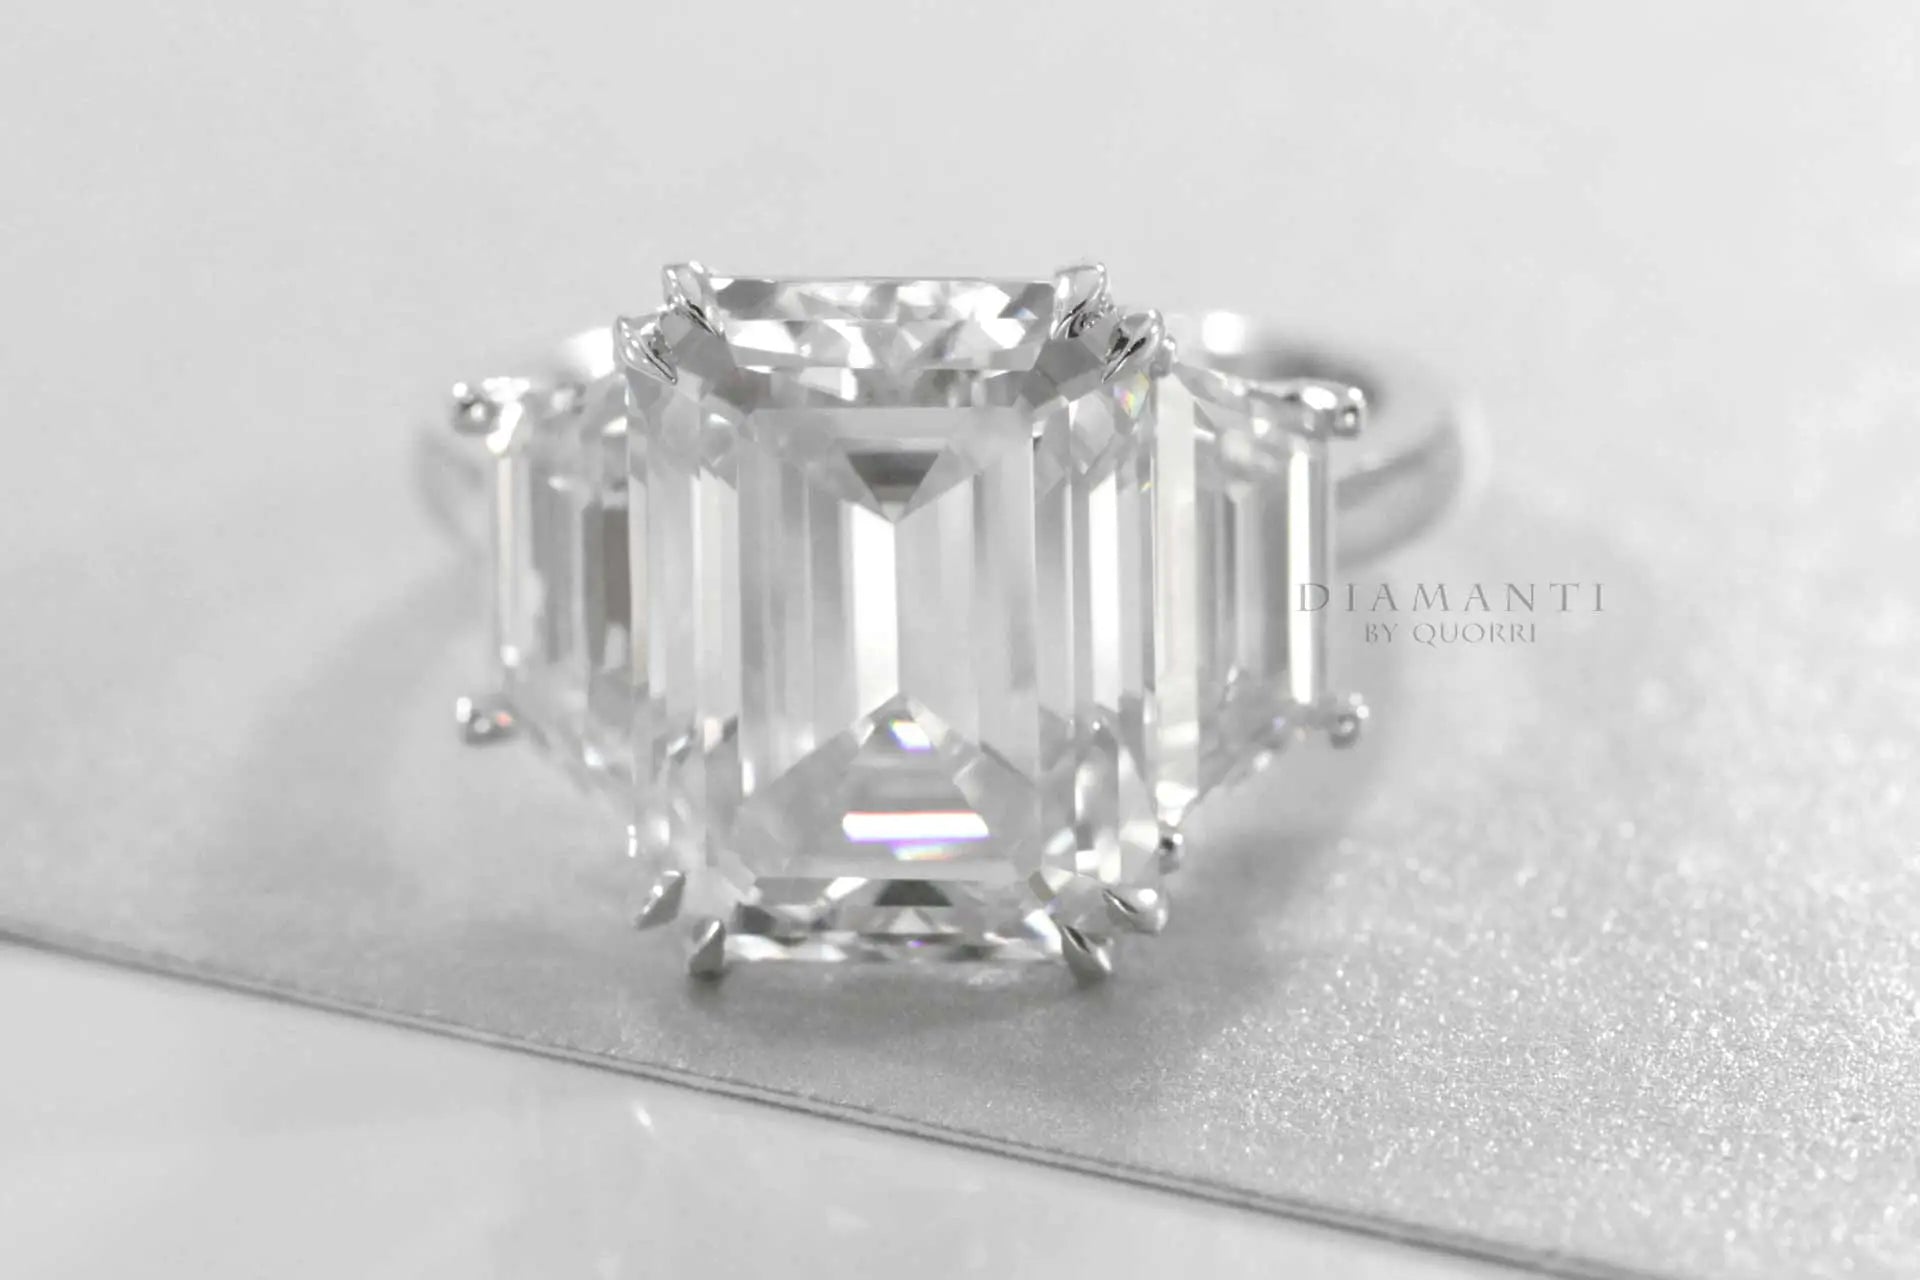 18k white gold dual claw 6 carat emerald and trapezoid three stone lab diamond engagement ring quorri